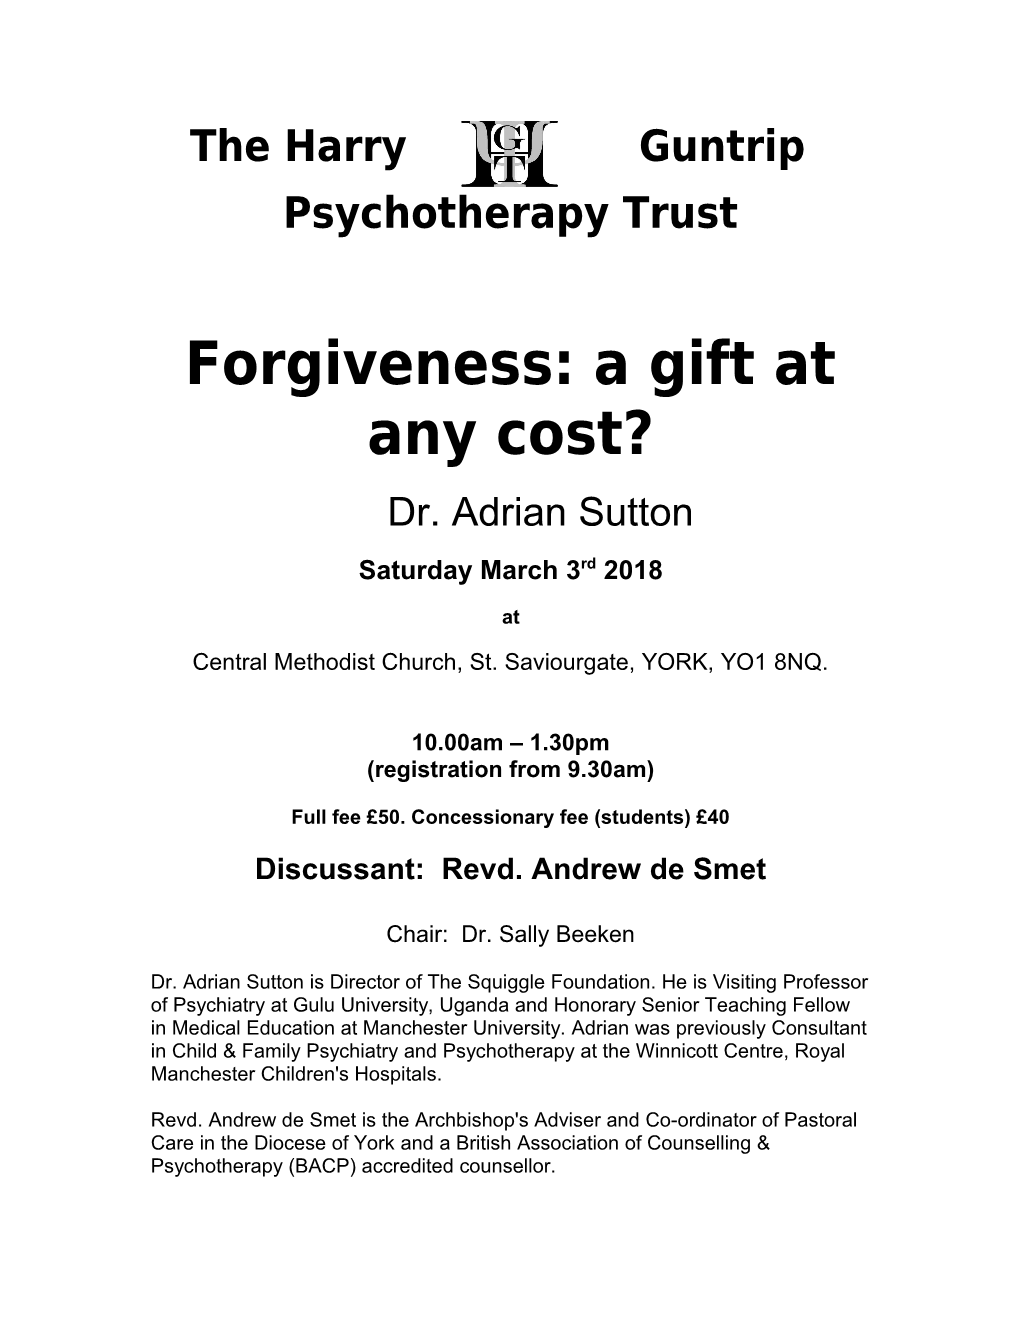 Forgiveness: a Gift at Any Cost?